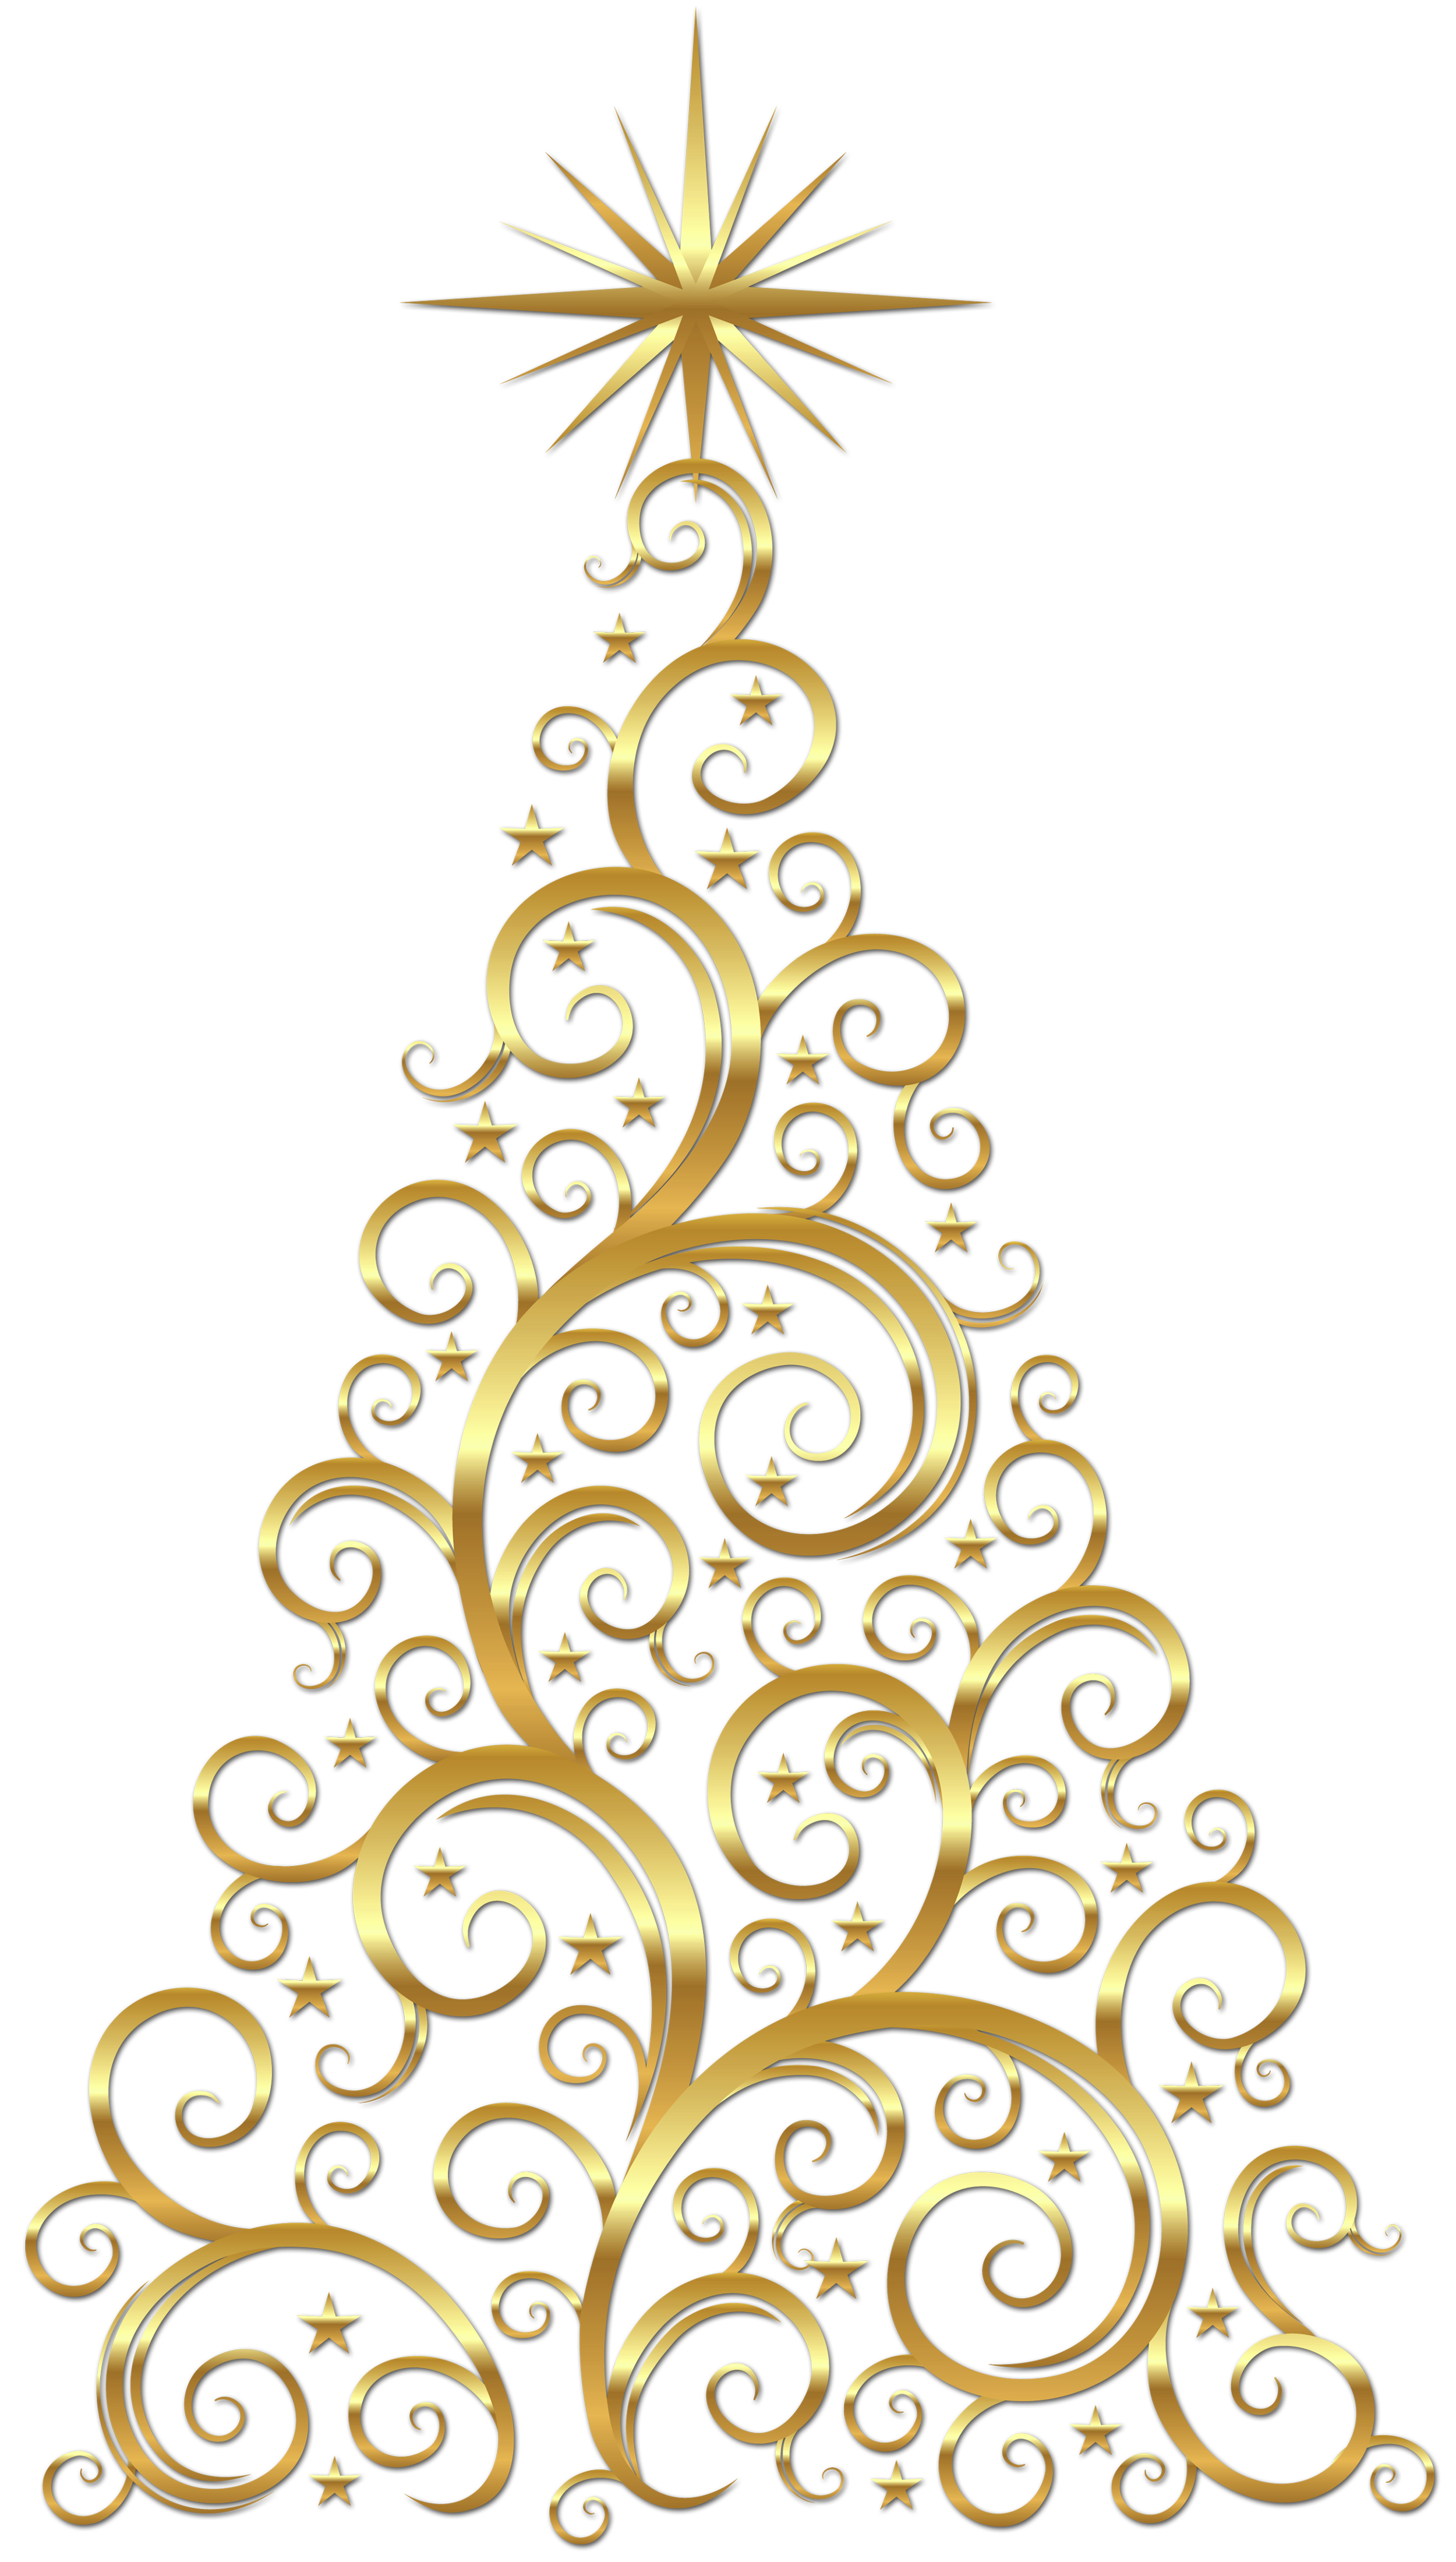 Xmas tree clip art christmas tree clipart black and white image 2 